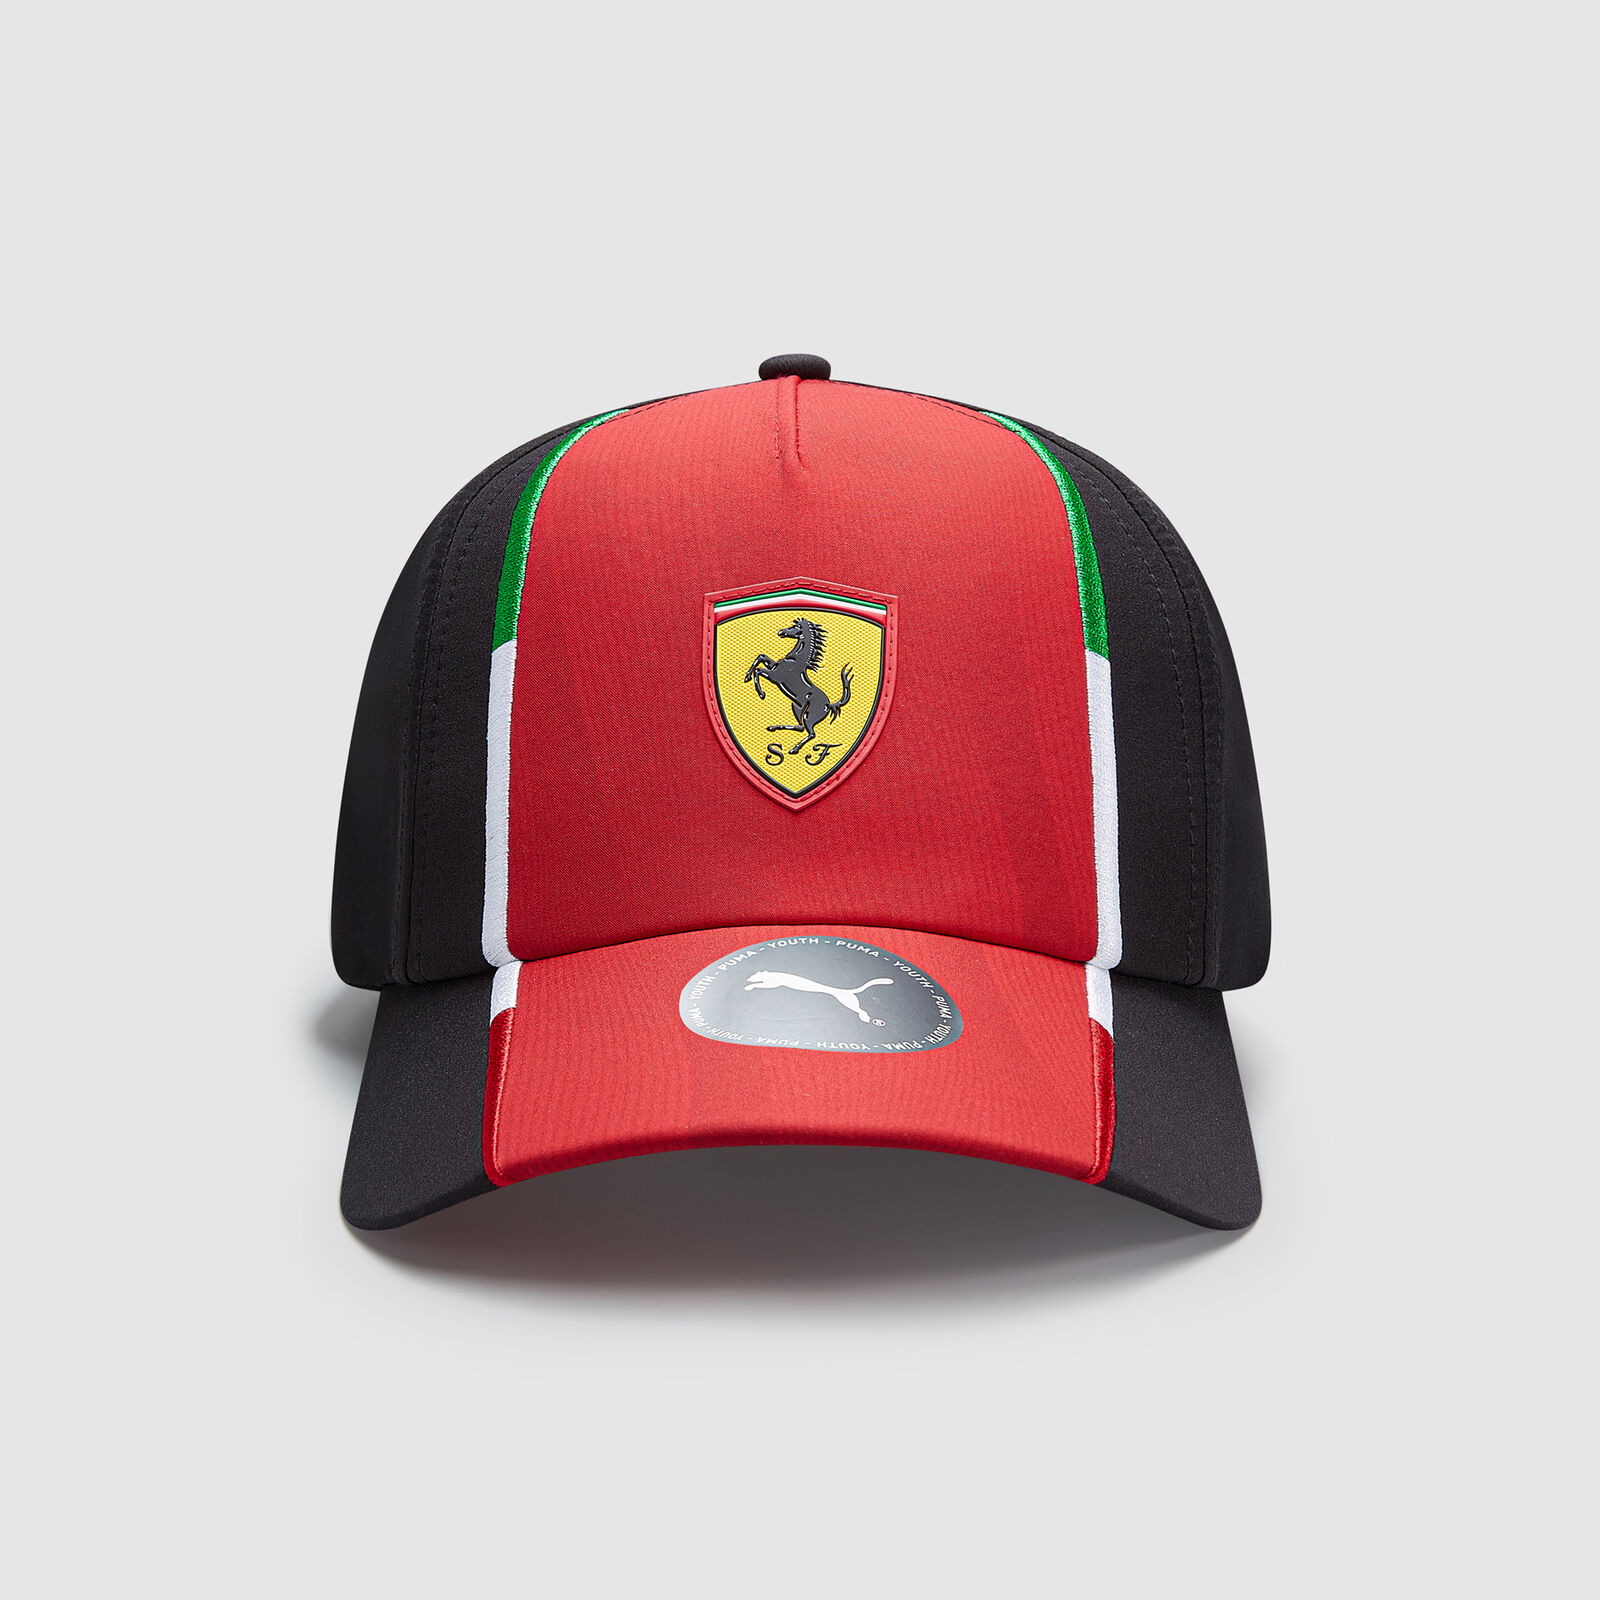 ScuderiaFerrari Casquette Ferrari Officielle pour Homme, Adulte